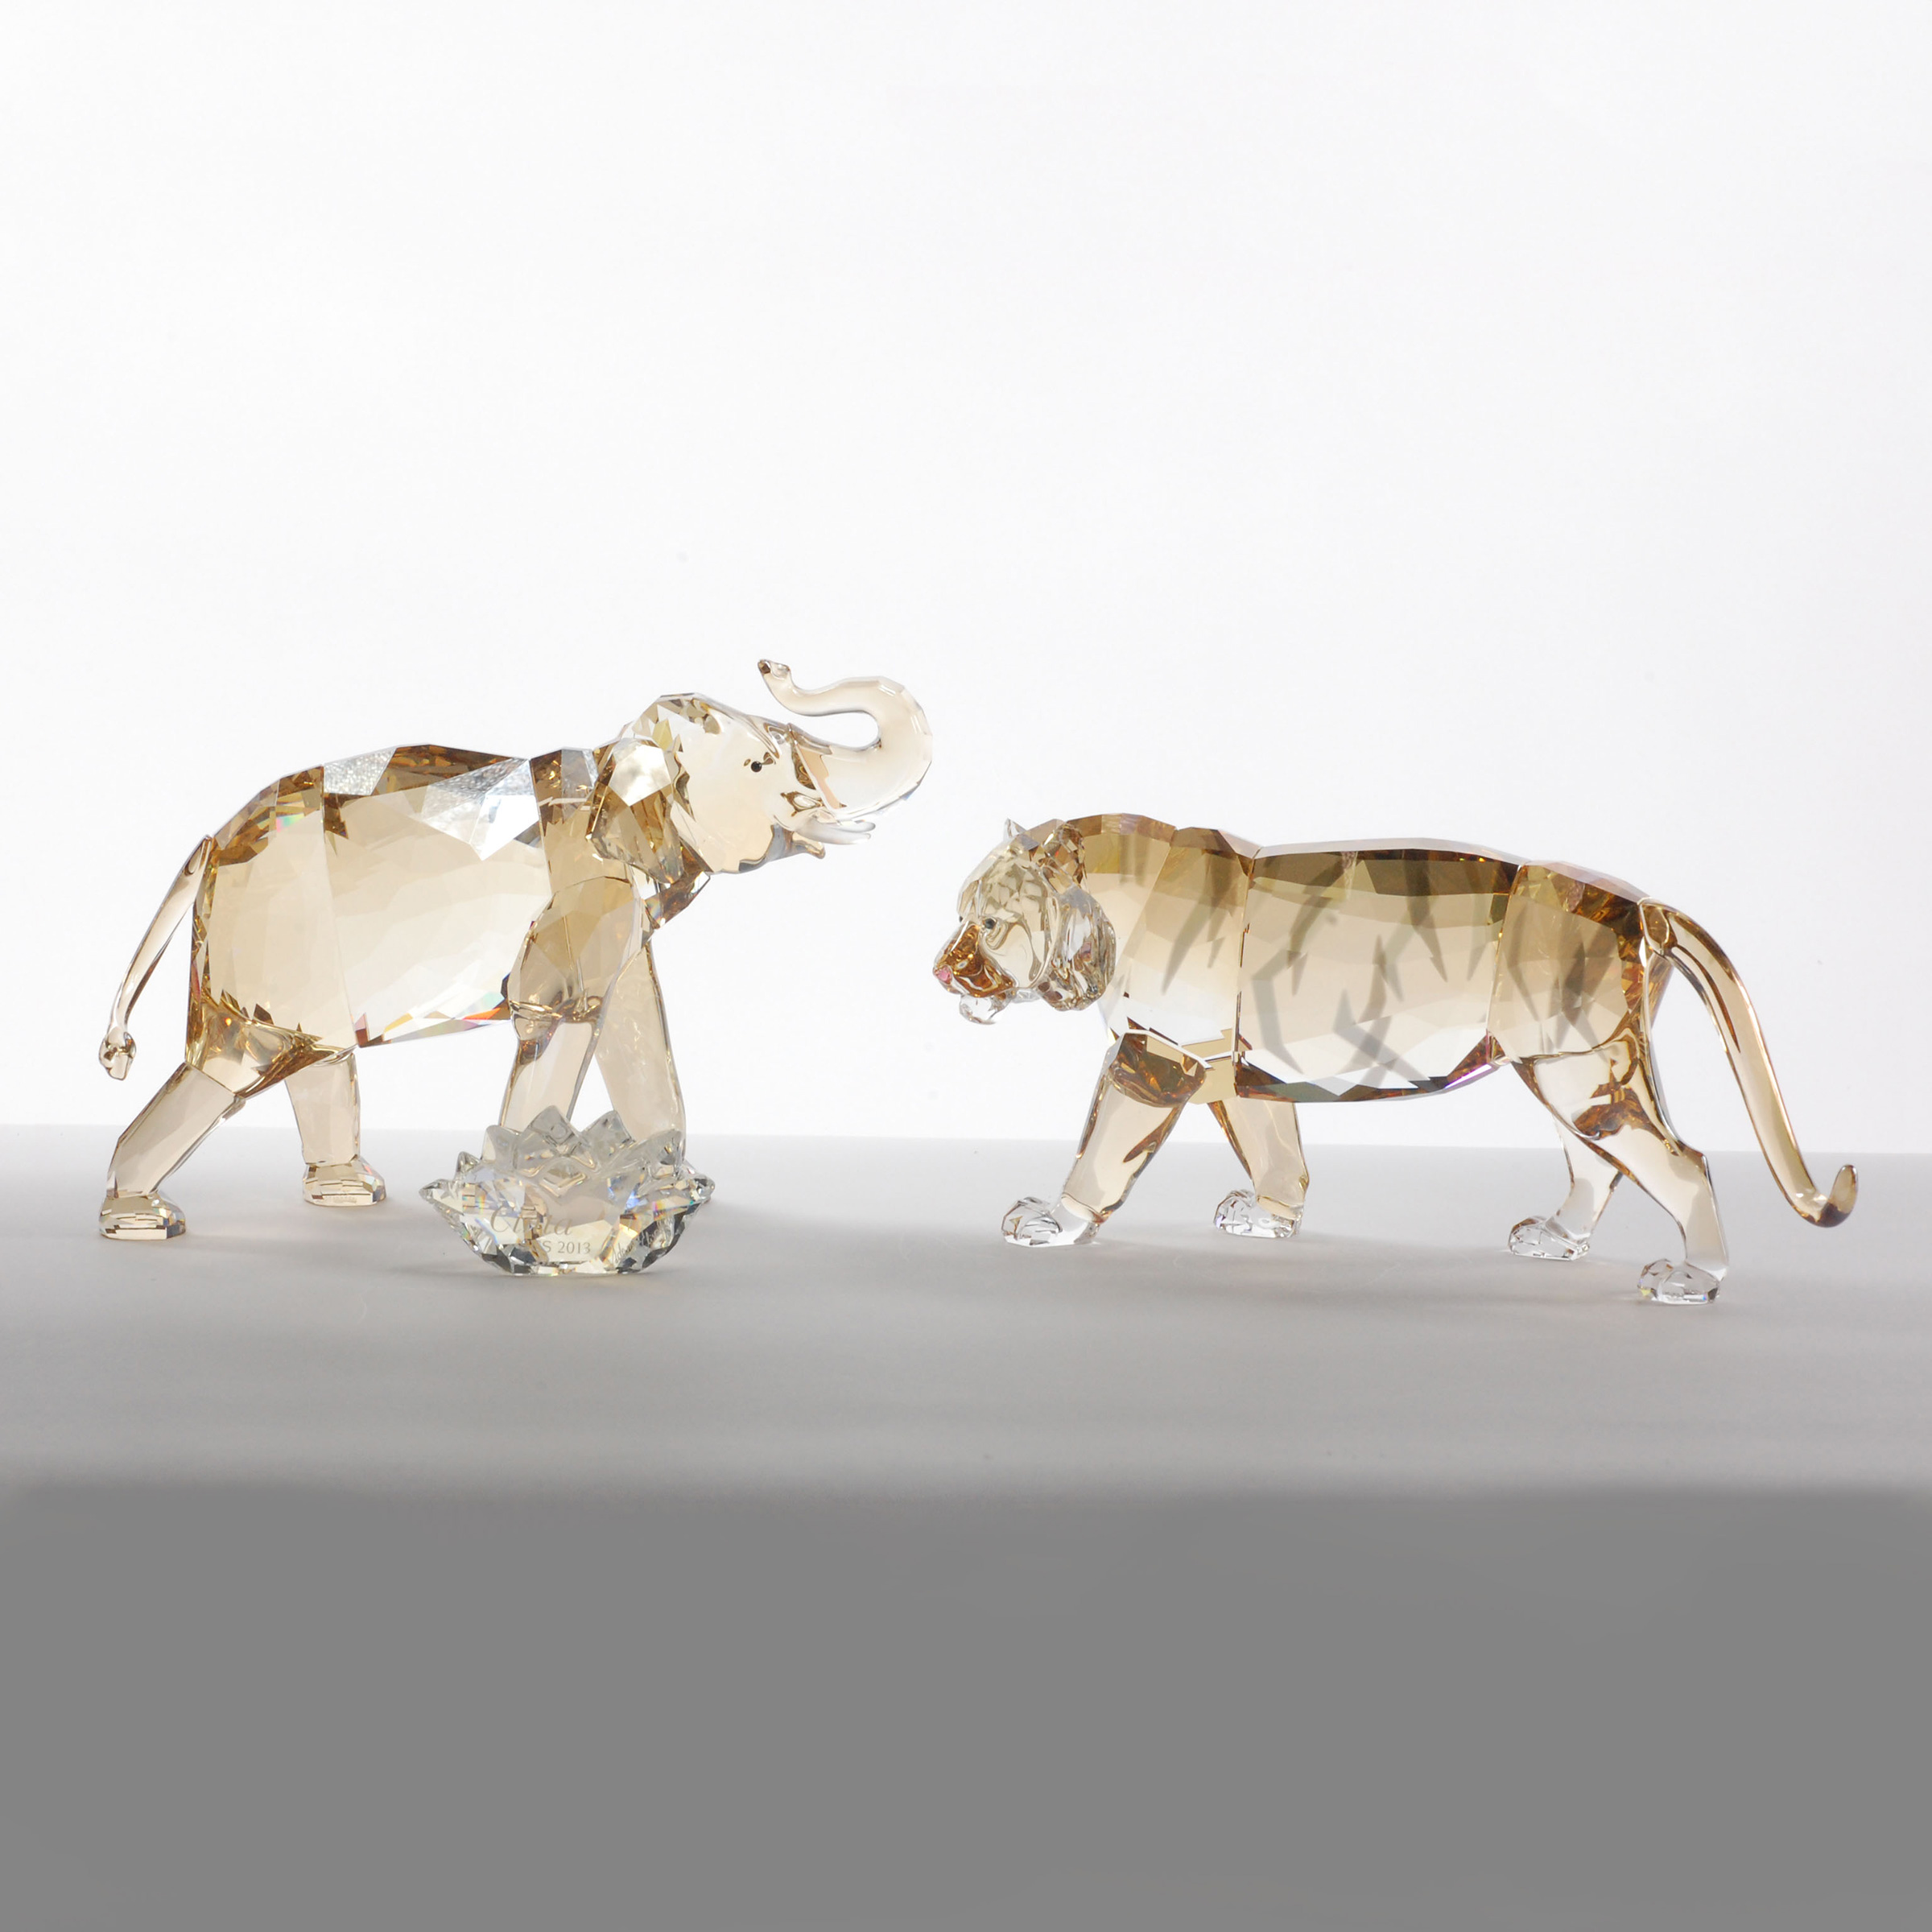 Swarovski Crystal ‘Endangered Wildlife’: Tiger and Cinta Elephant, 2010/2013